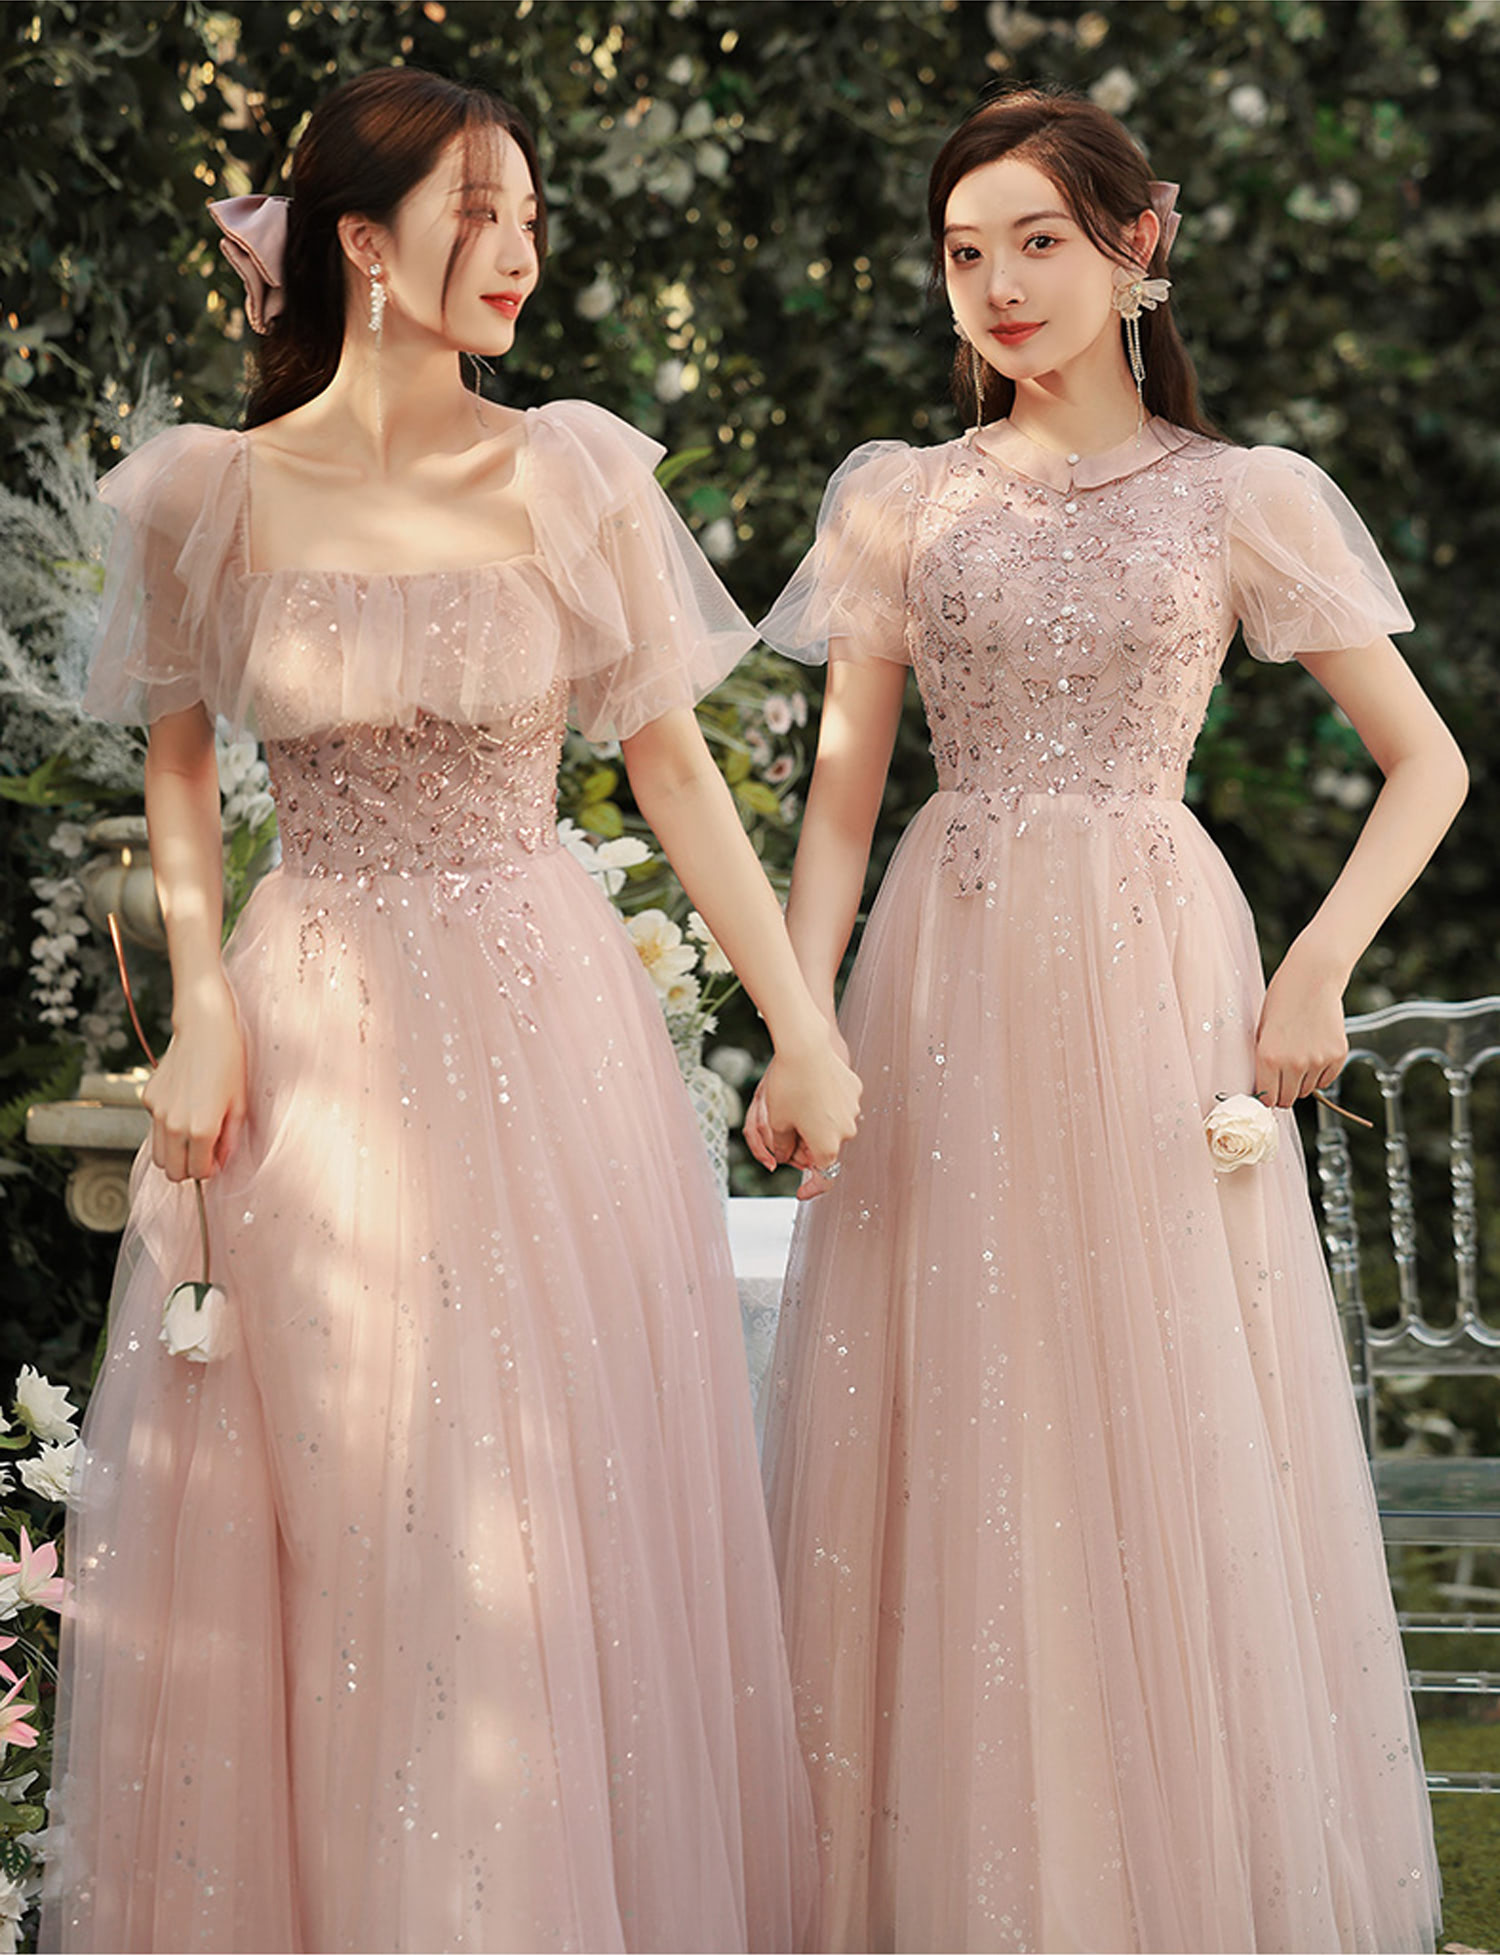 Aesthetic-Pink-Bridal-Wedding-Party-Bridesmaid-Long-Maxi-Dress13.jpg